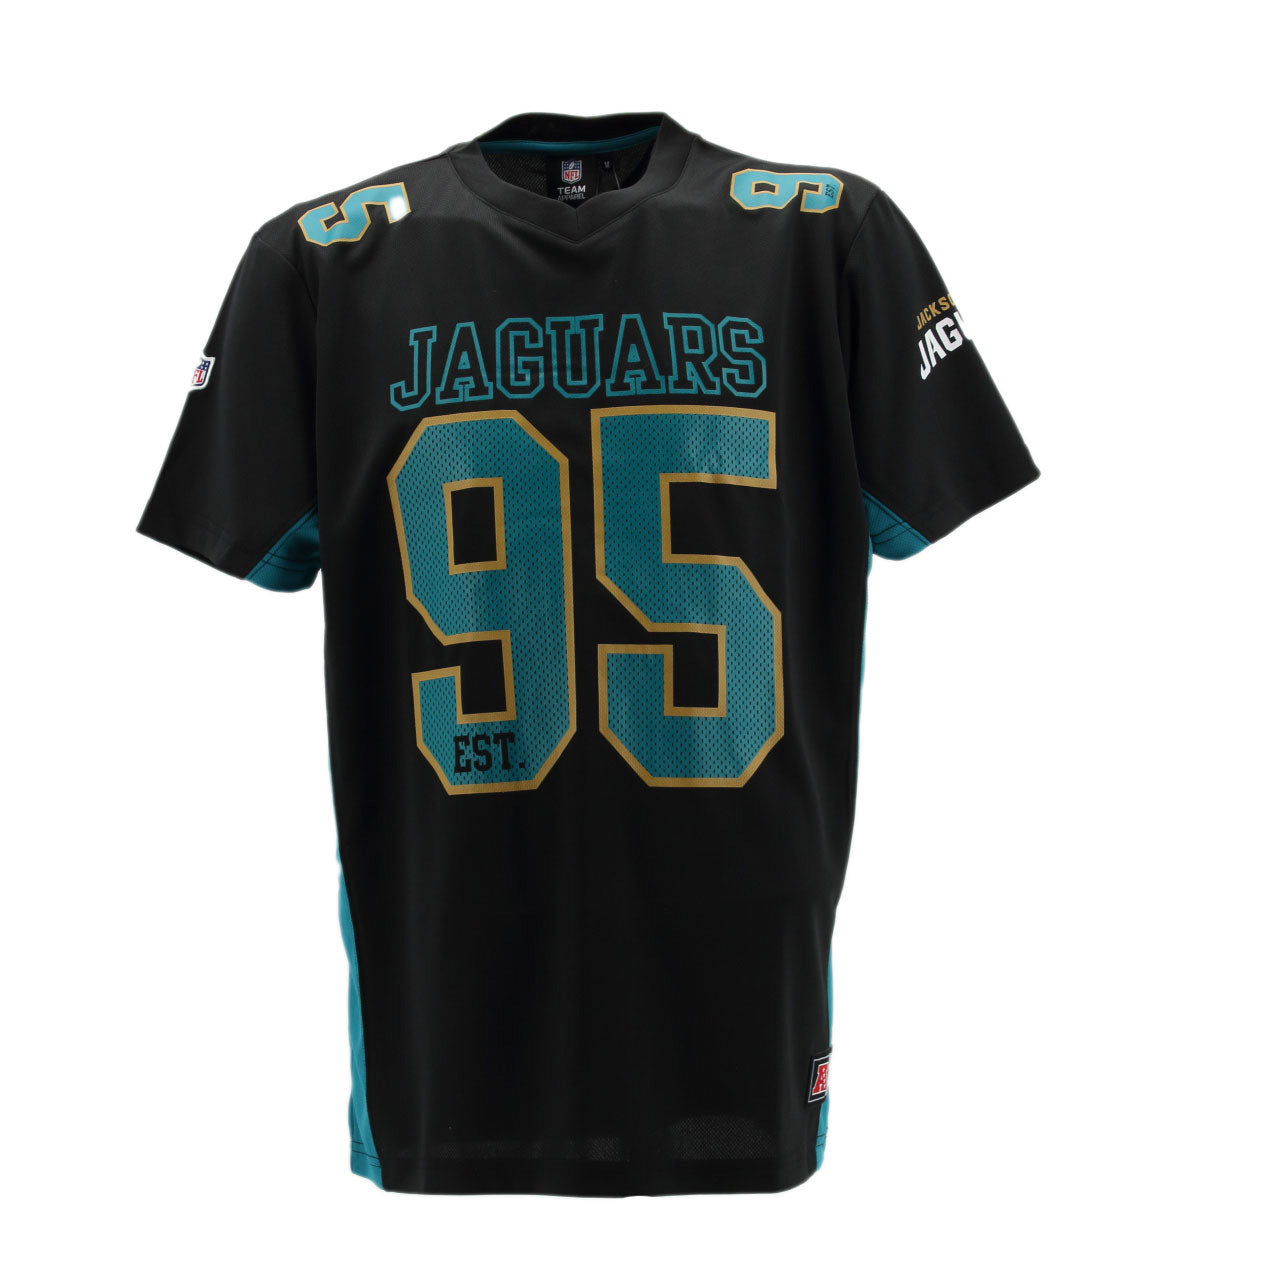 Fanatics NFL Jacksonville Jaguars Herren T-Shirt Trikot Nr 95 schwarz MJJ2705DB - Brand Dealers Arena e.K. - BDA24